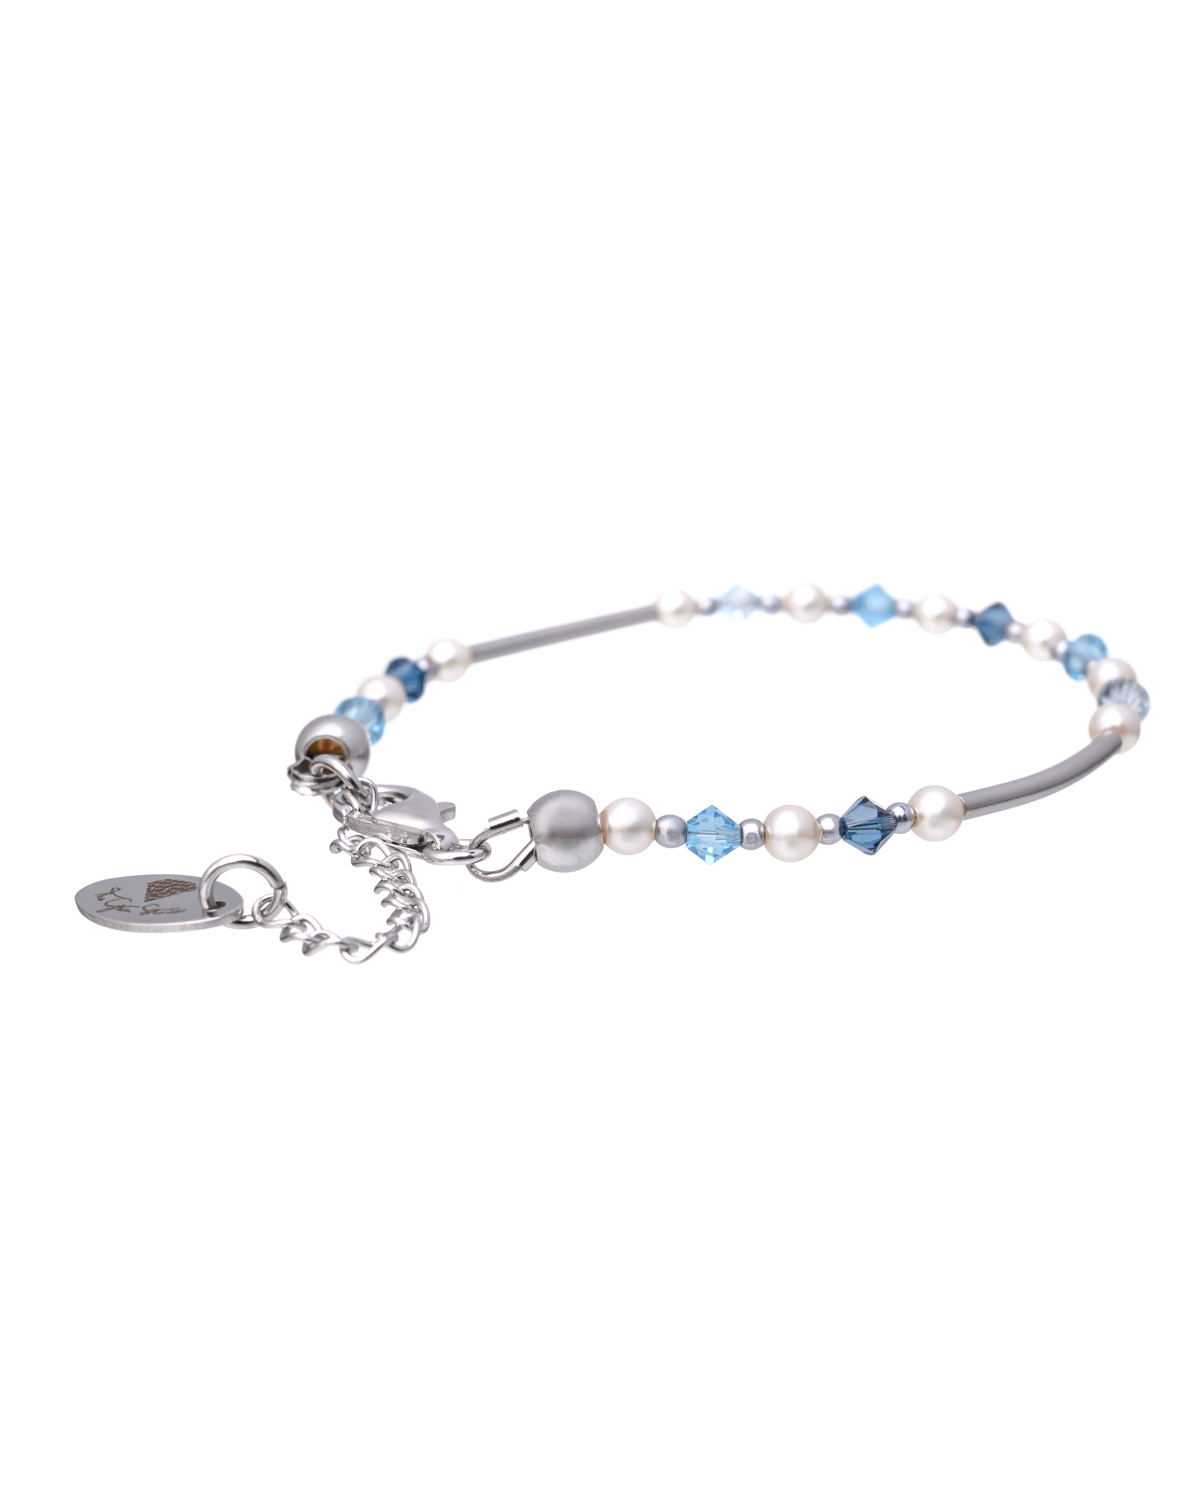 Crystal and Pearls Bracelet - Bluee tones